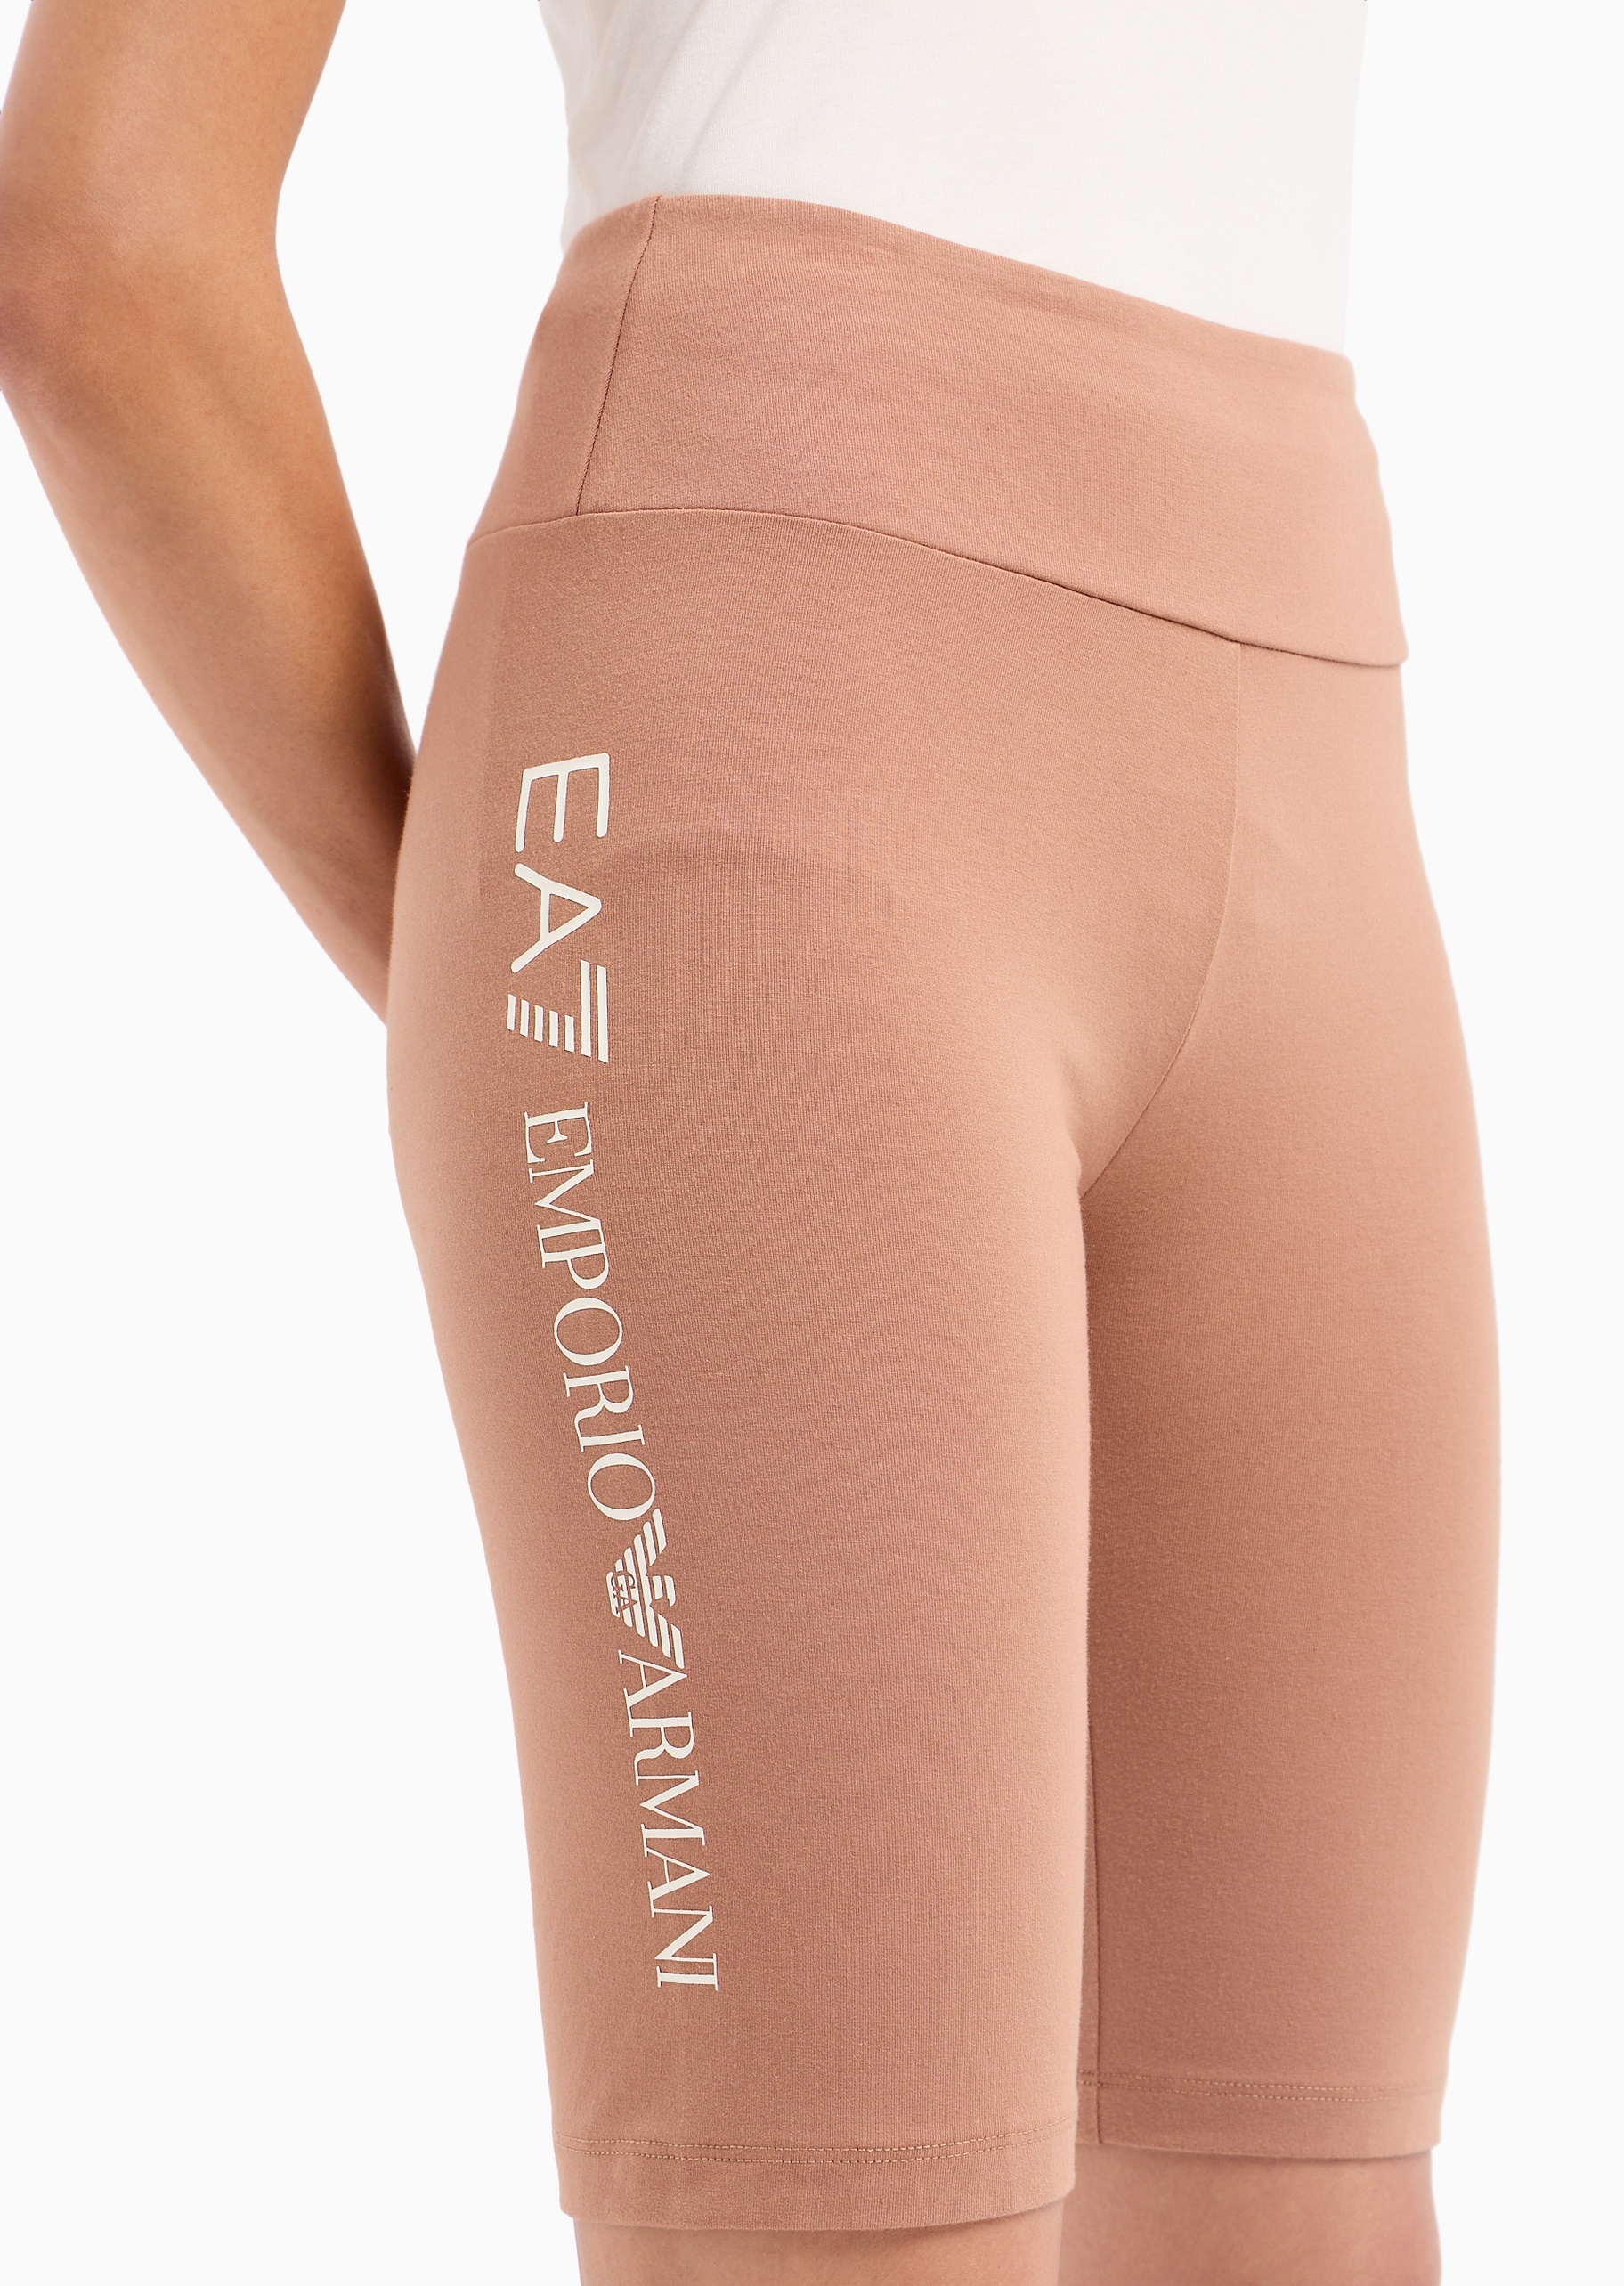 EA7 女士棉质弹力紧身高腰短款印花运动打底短裤